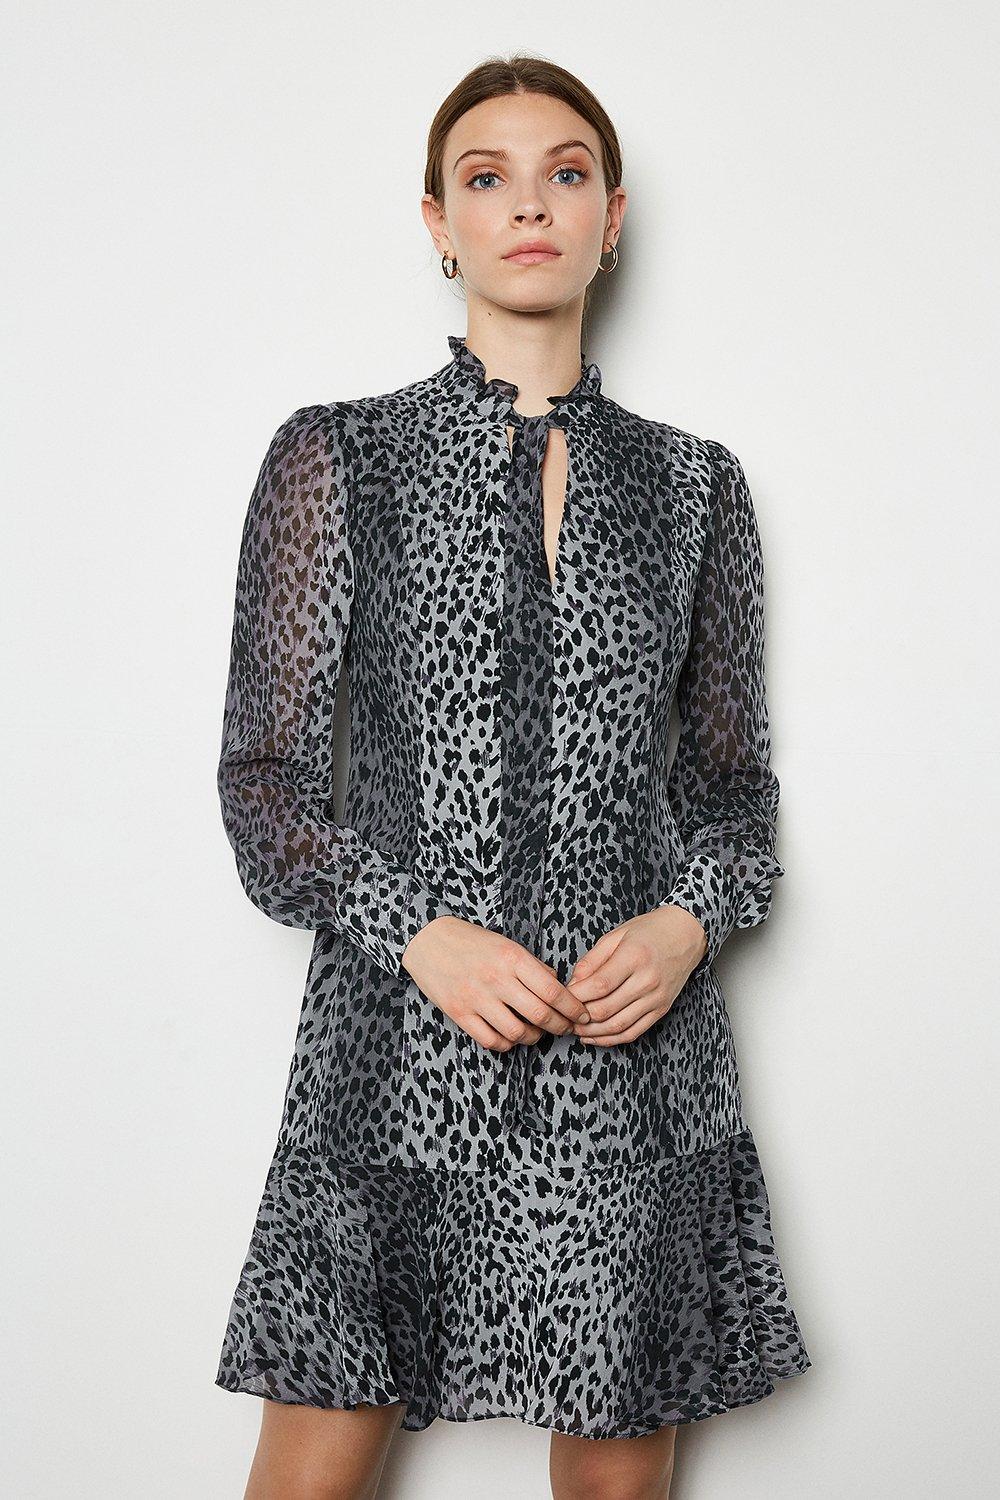 leopard print dresses for women